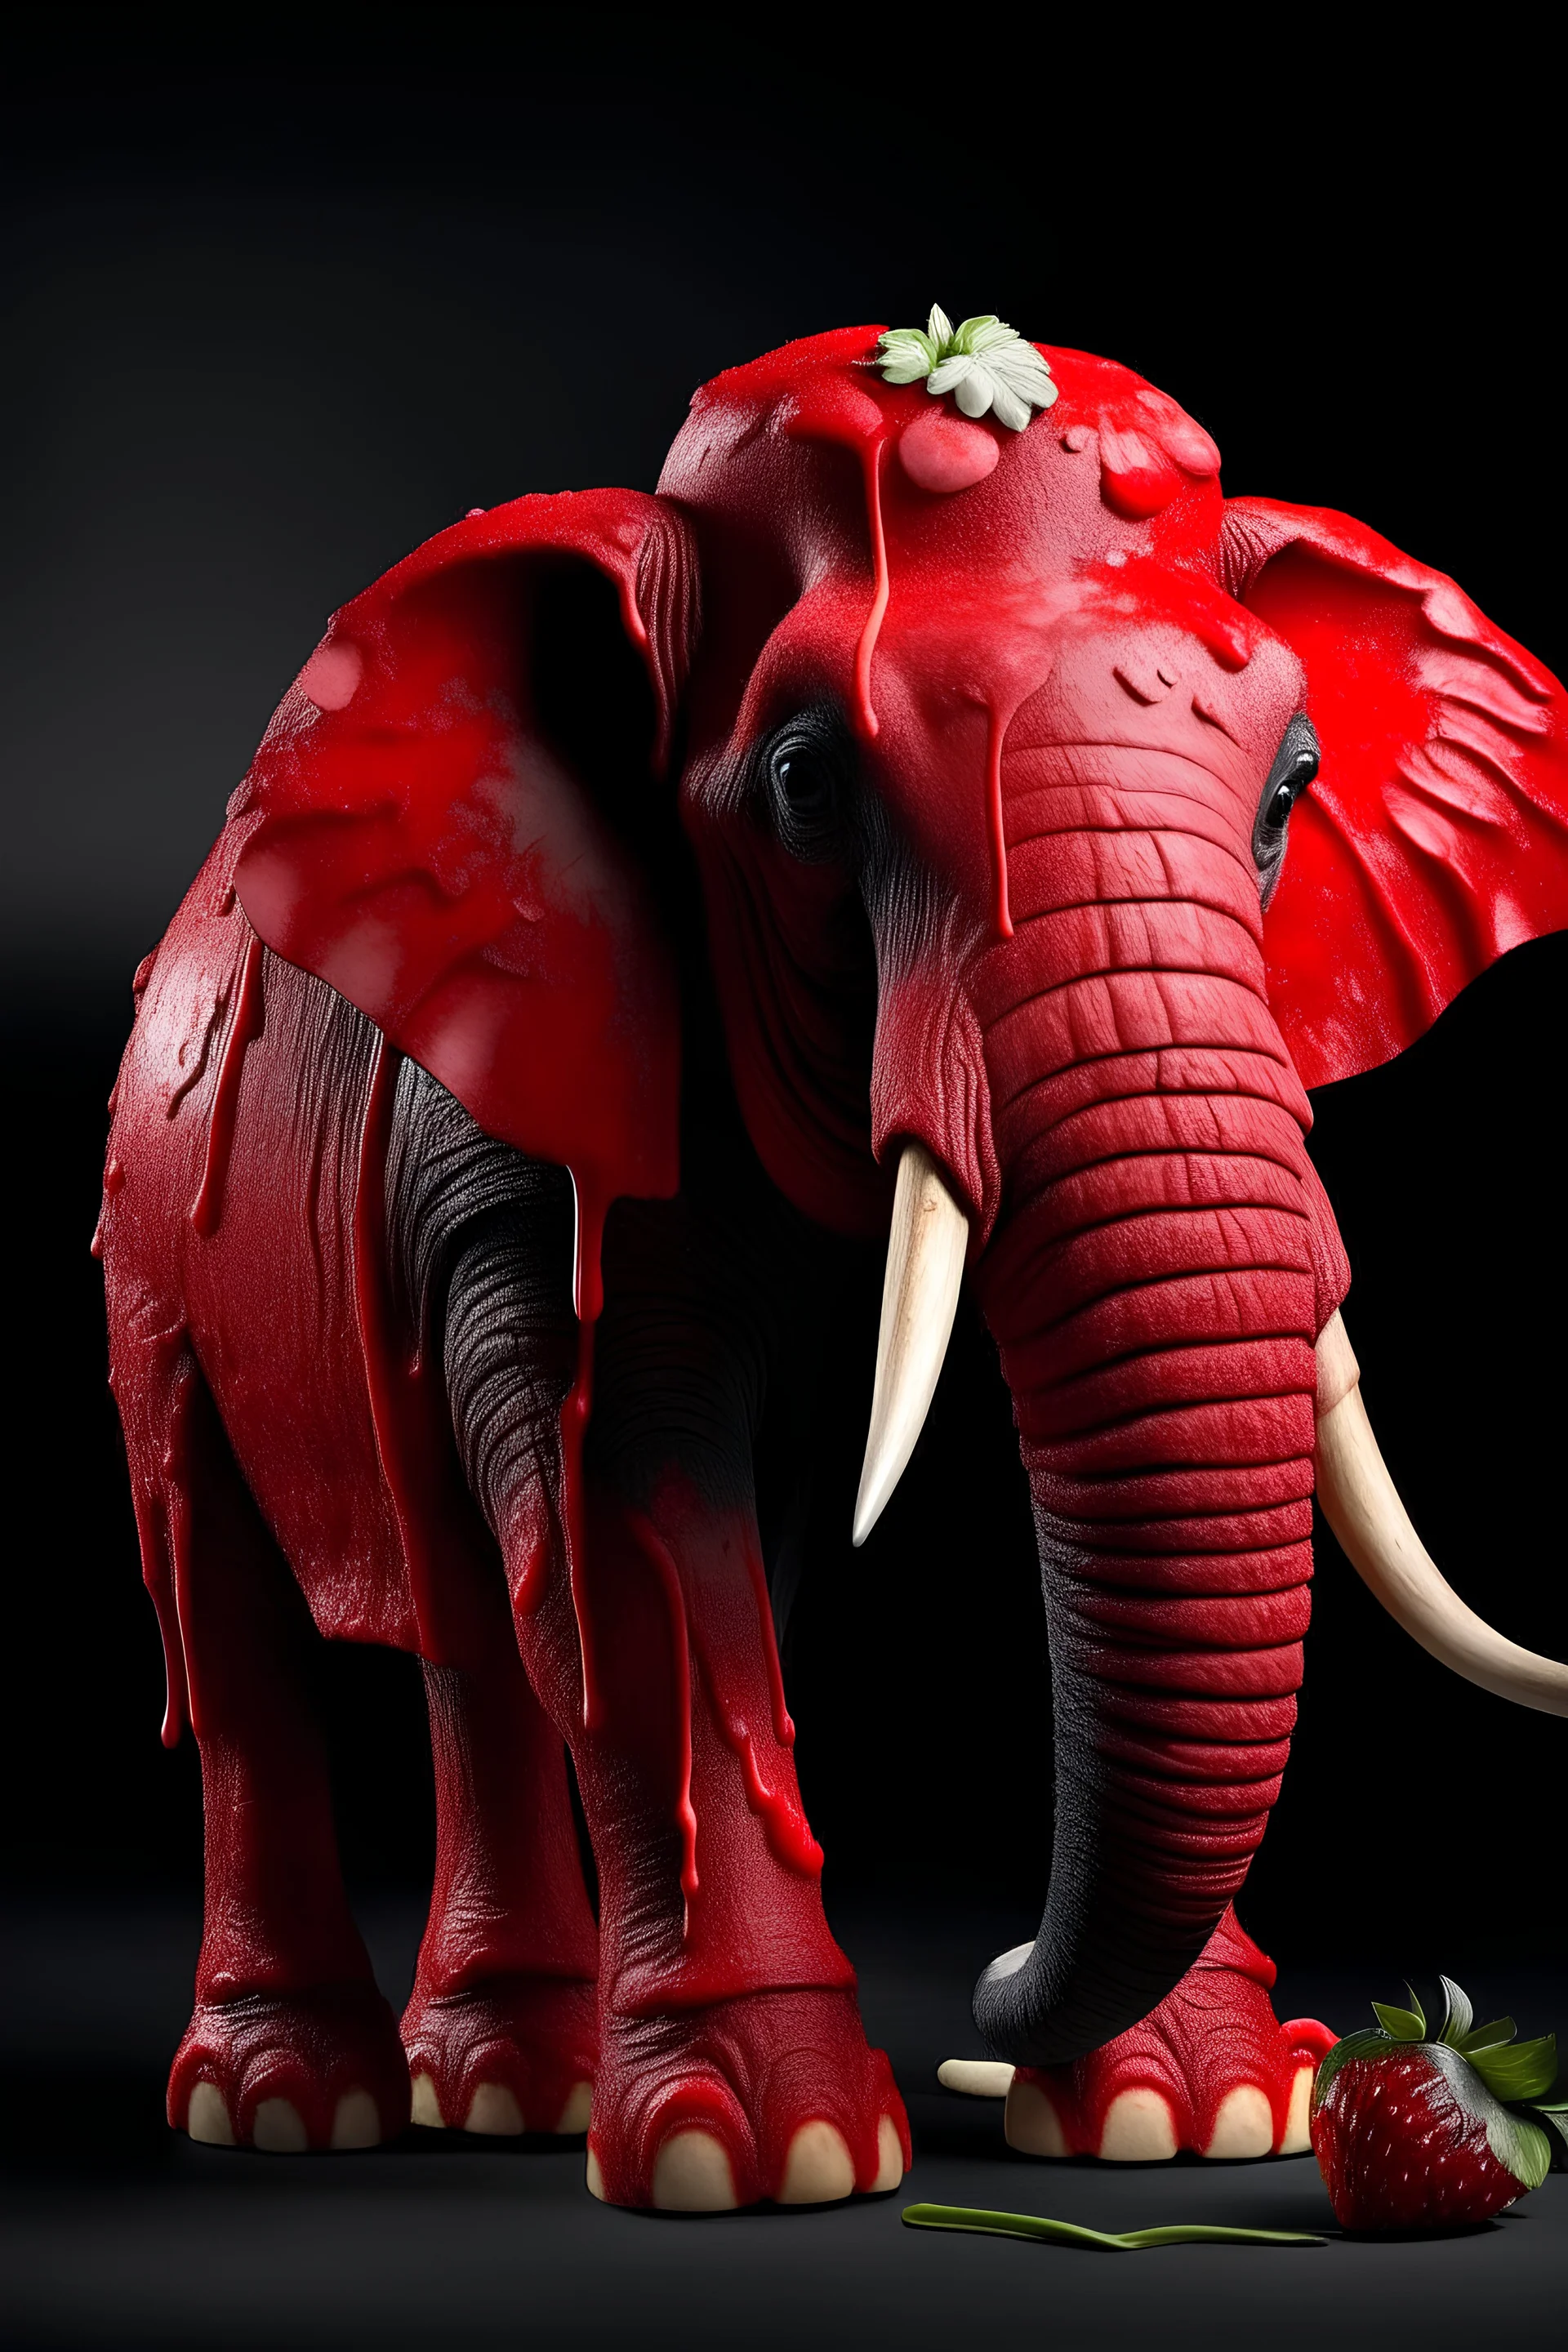 Strawberry elephant